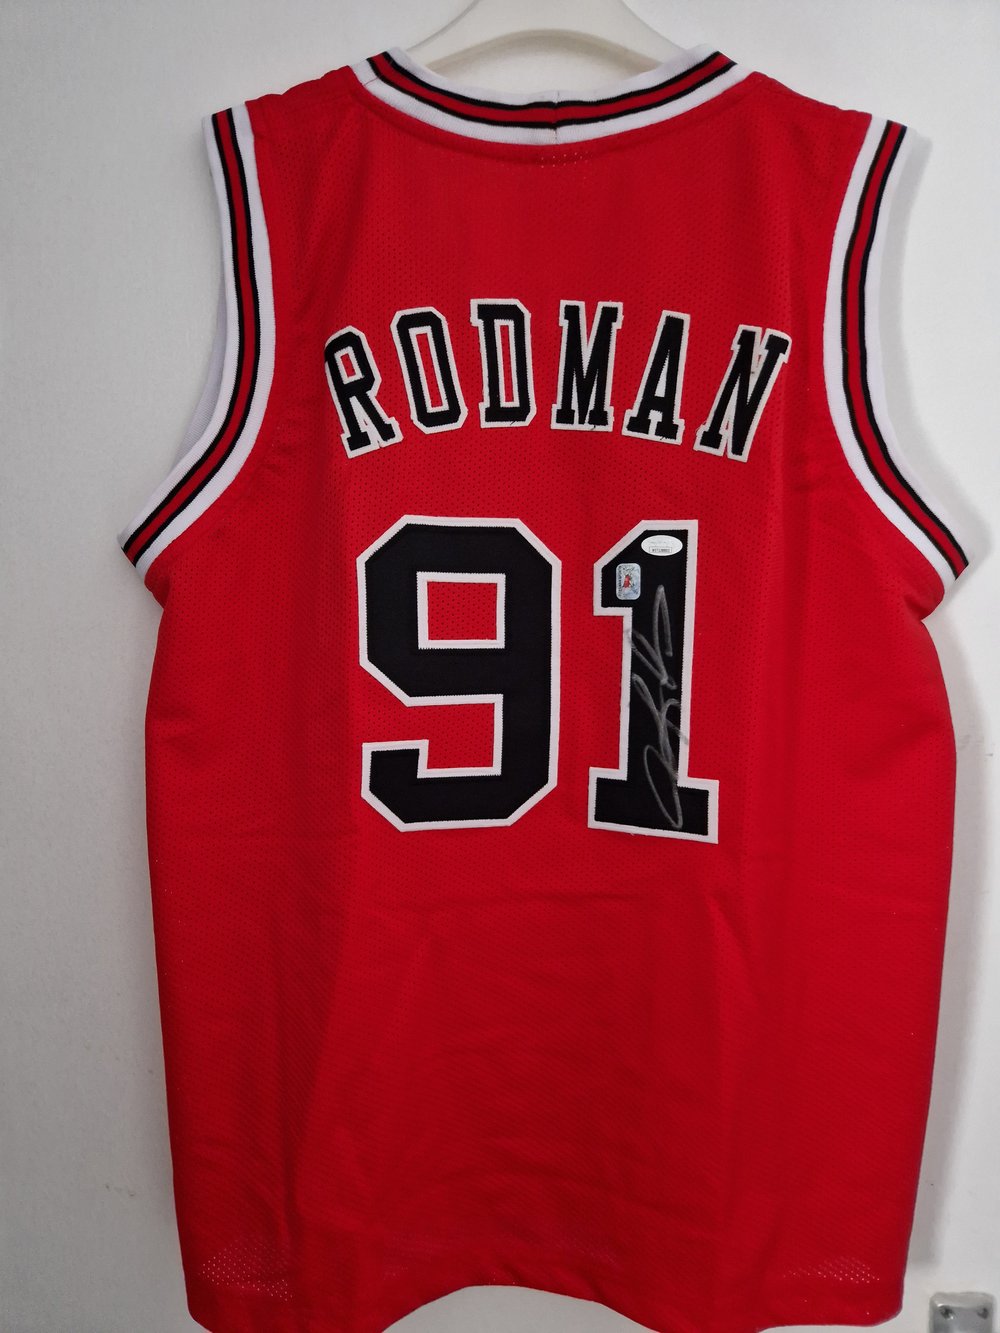 Dennis Rodman Signed Jersey JSA